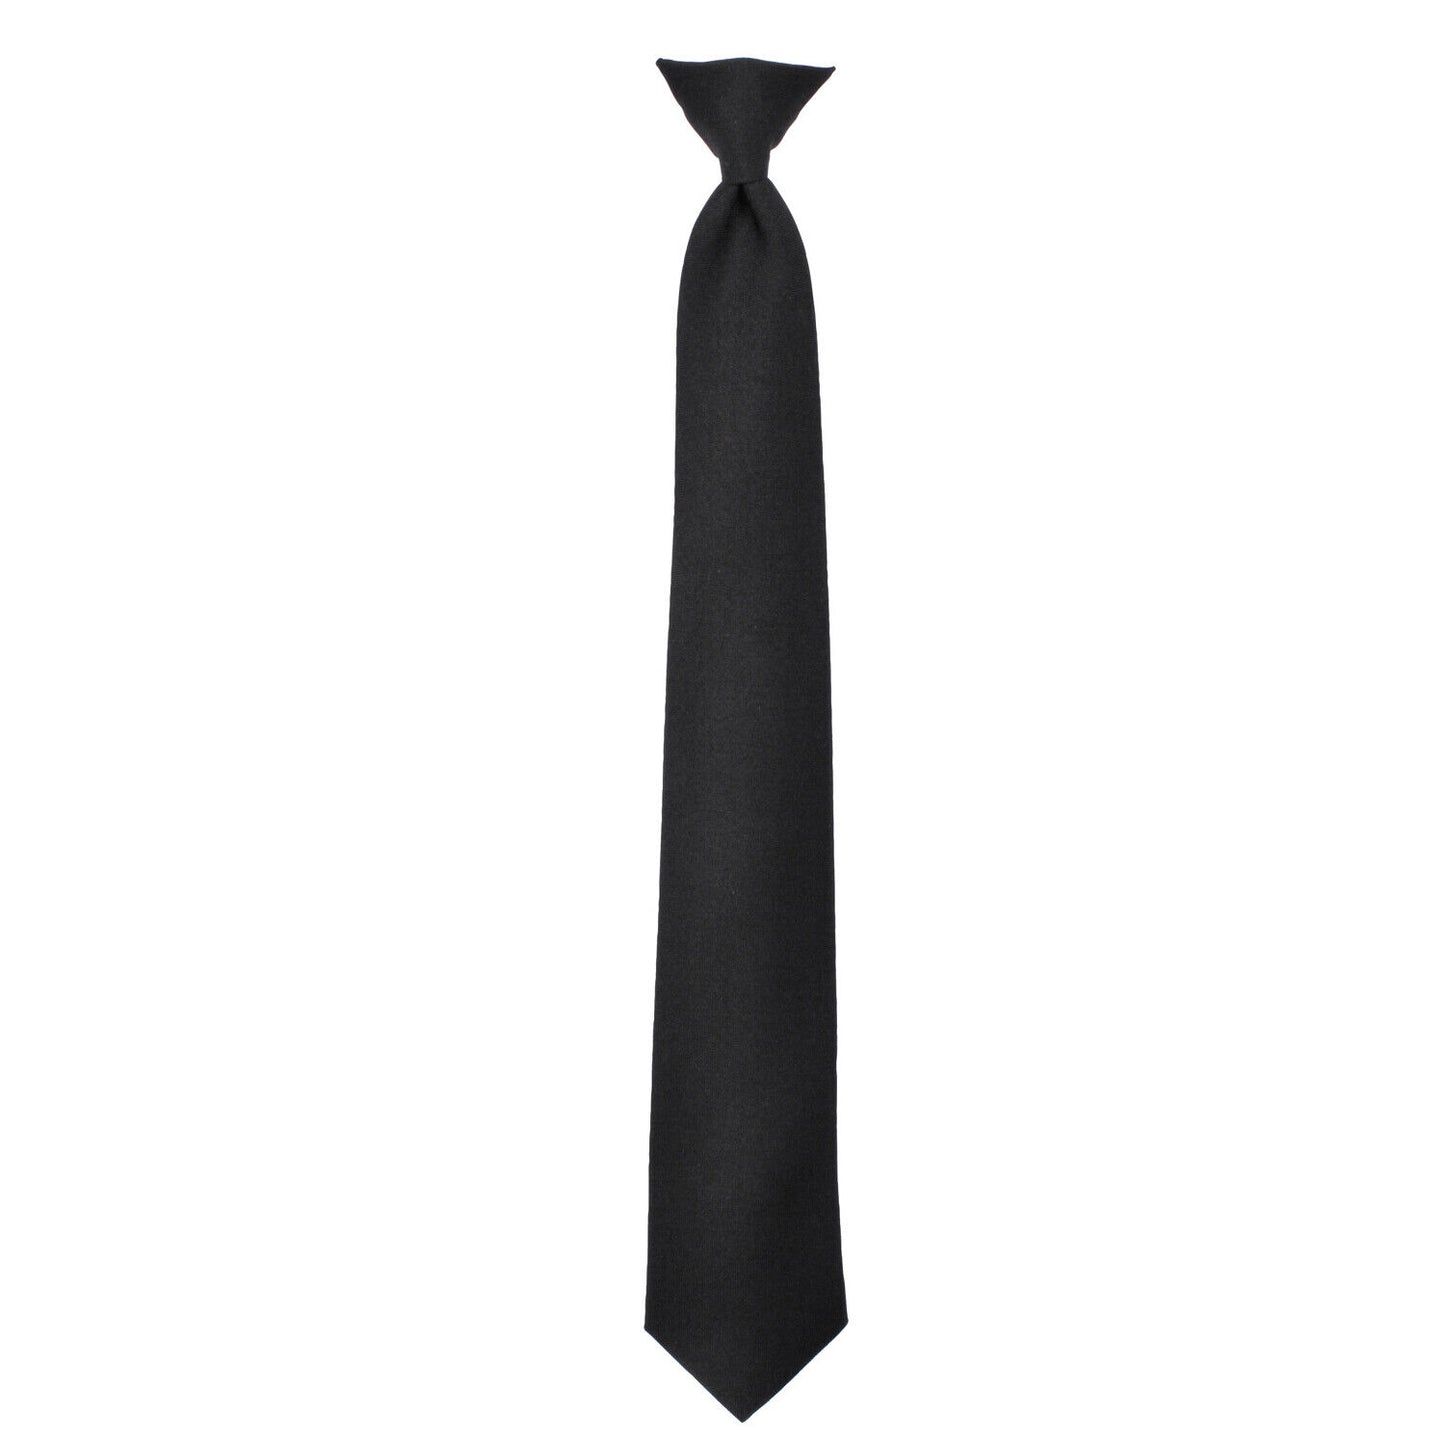 16 Inch Clip-On Neckties